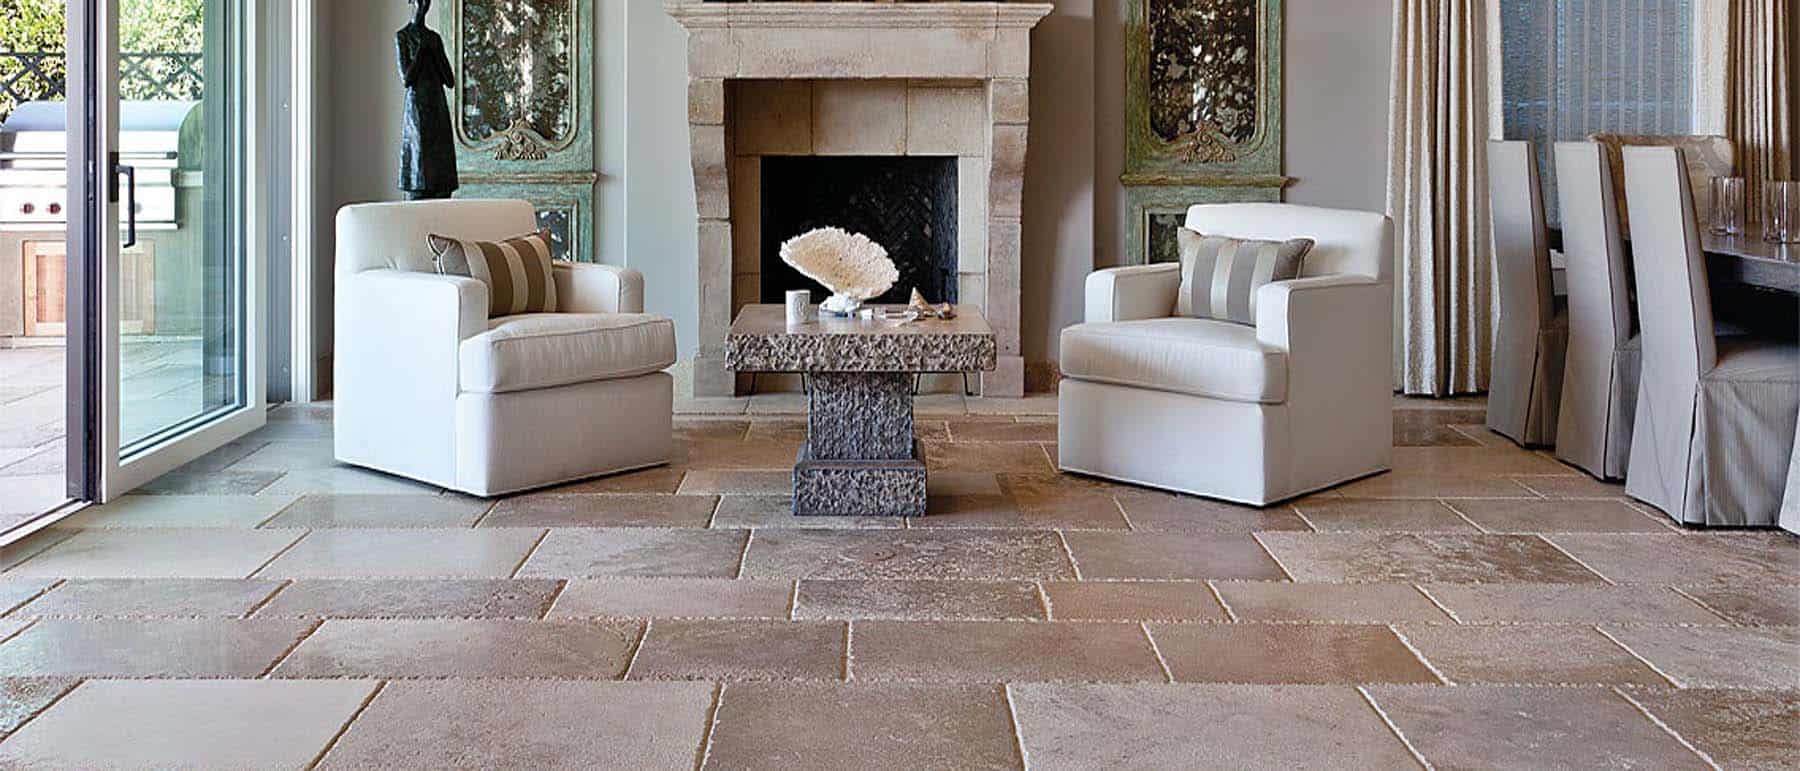 What Sets French Limestone Flooring Apart?